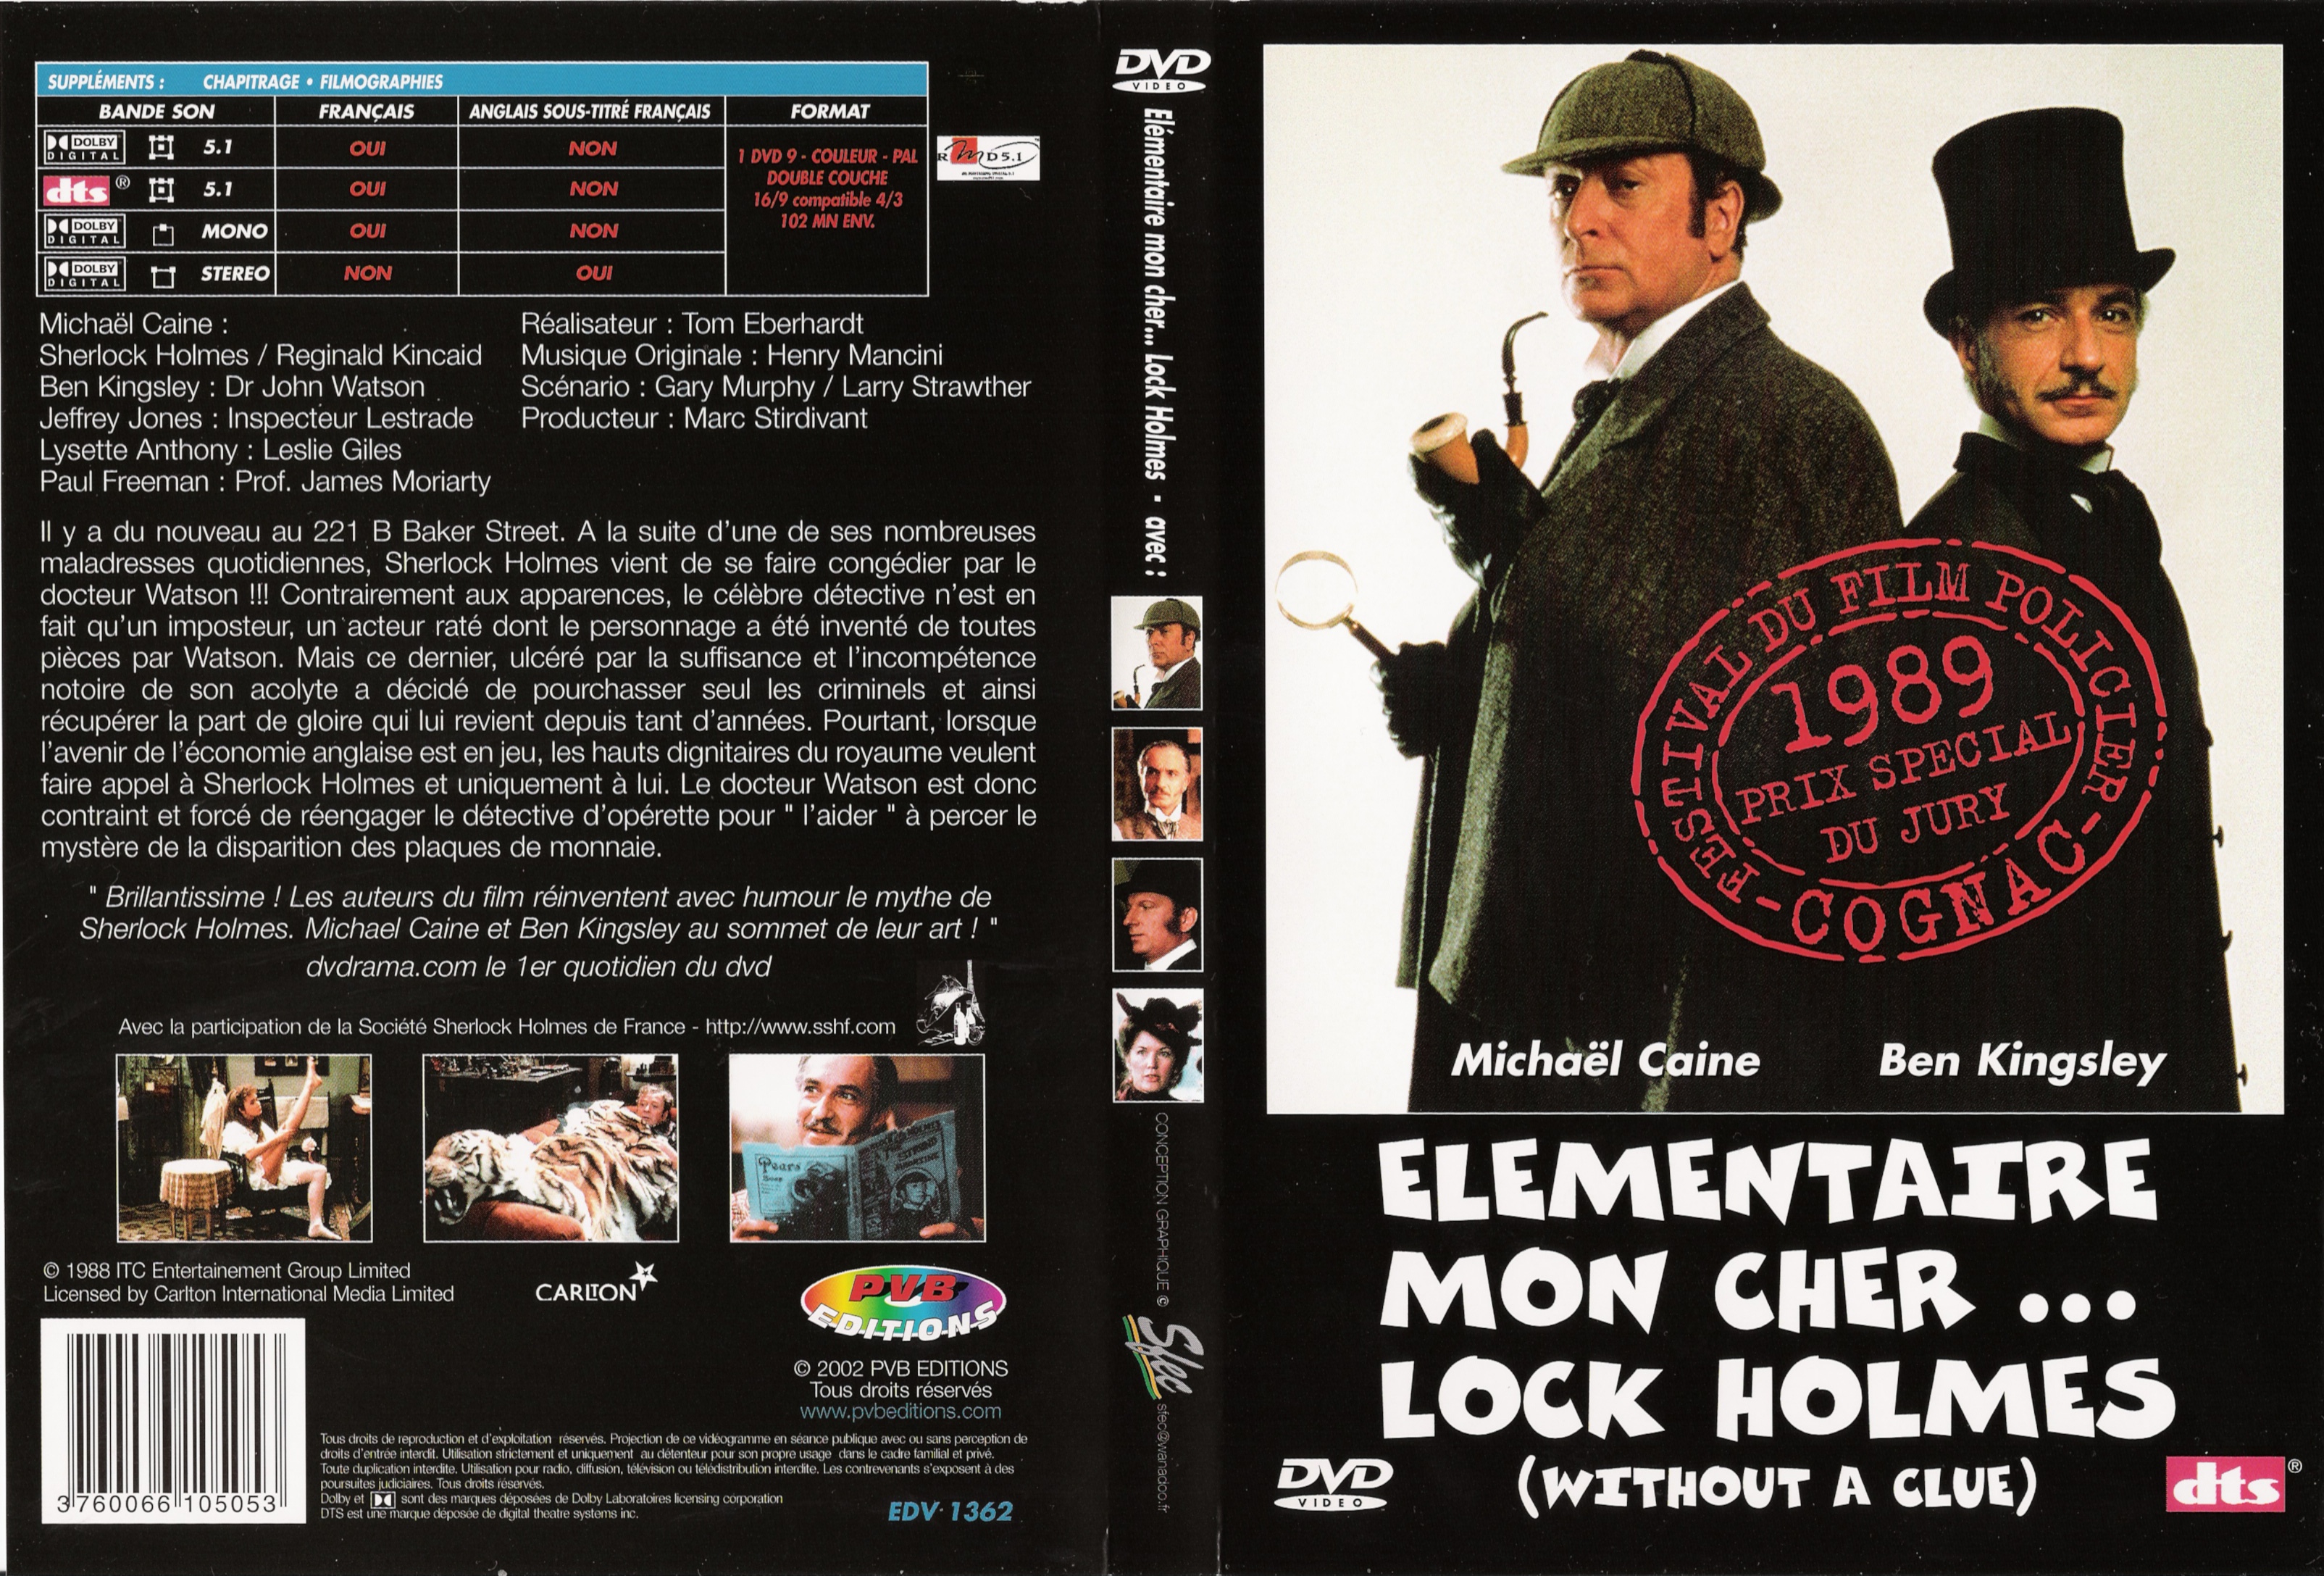 Jaquette DVD Elementaire mon cher Lock Holmes v2